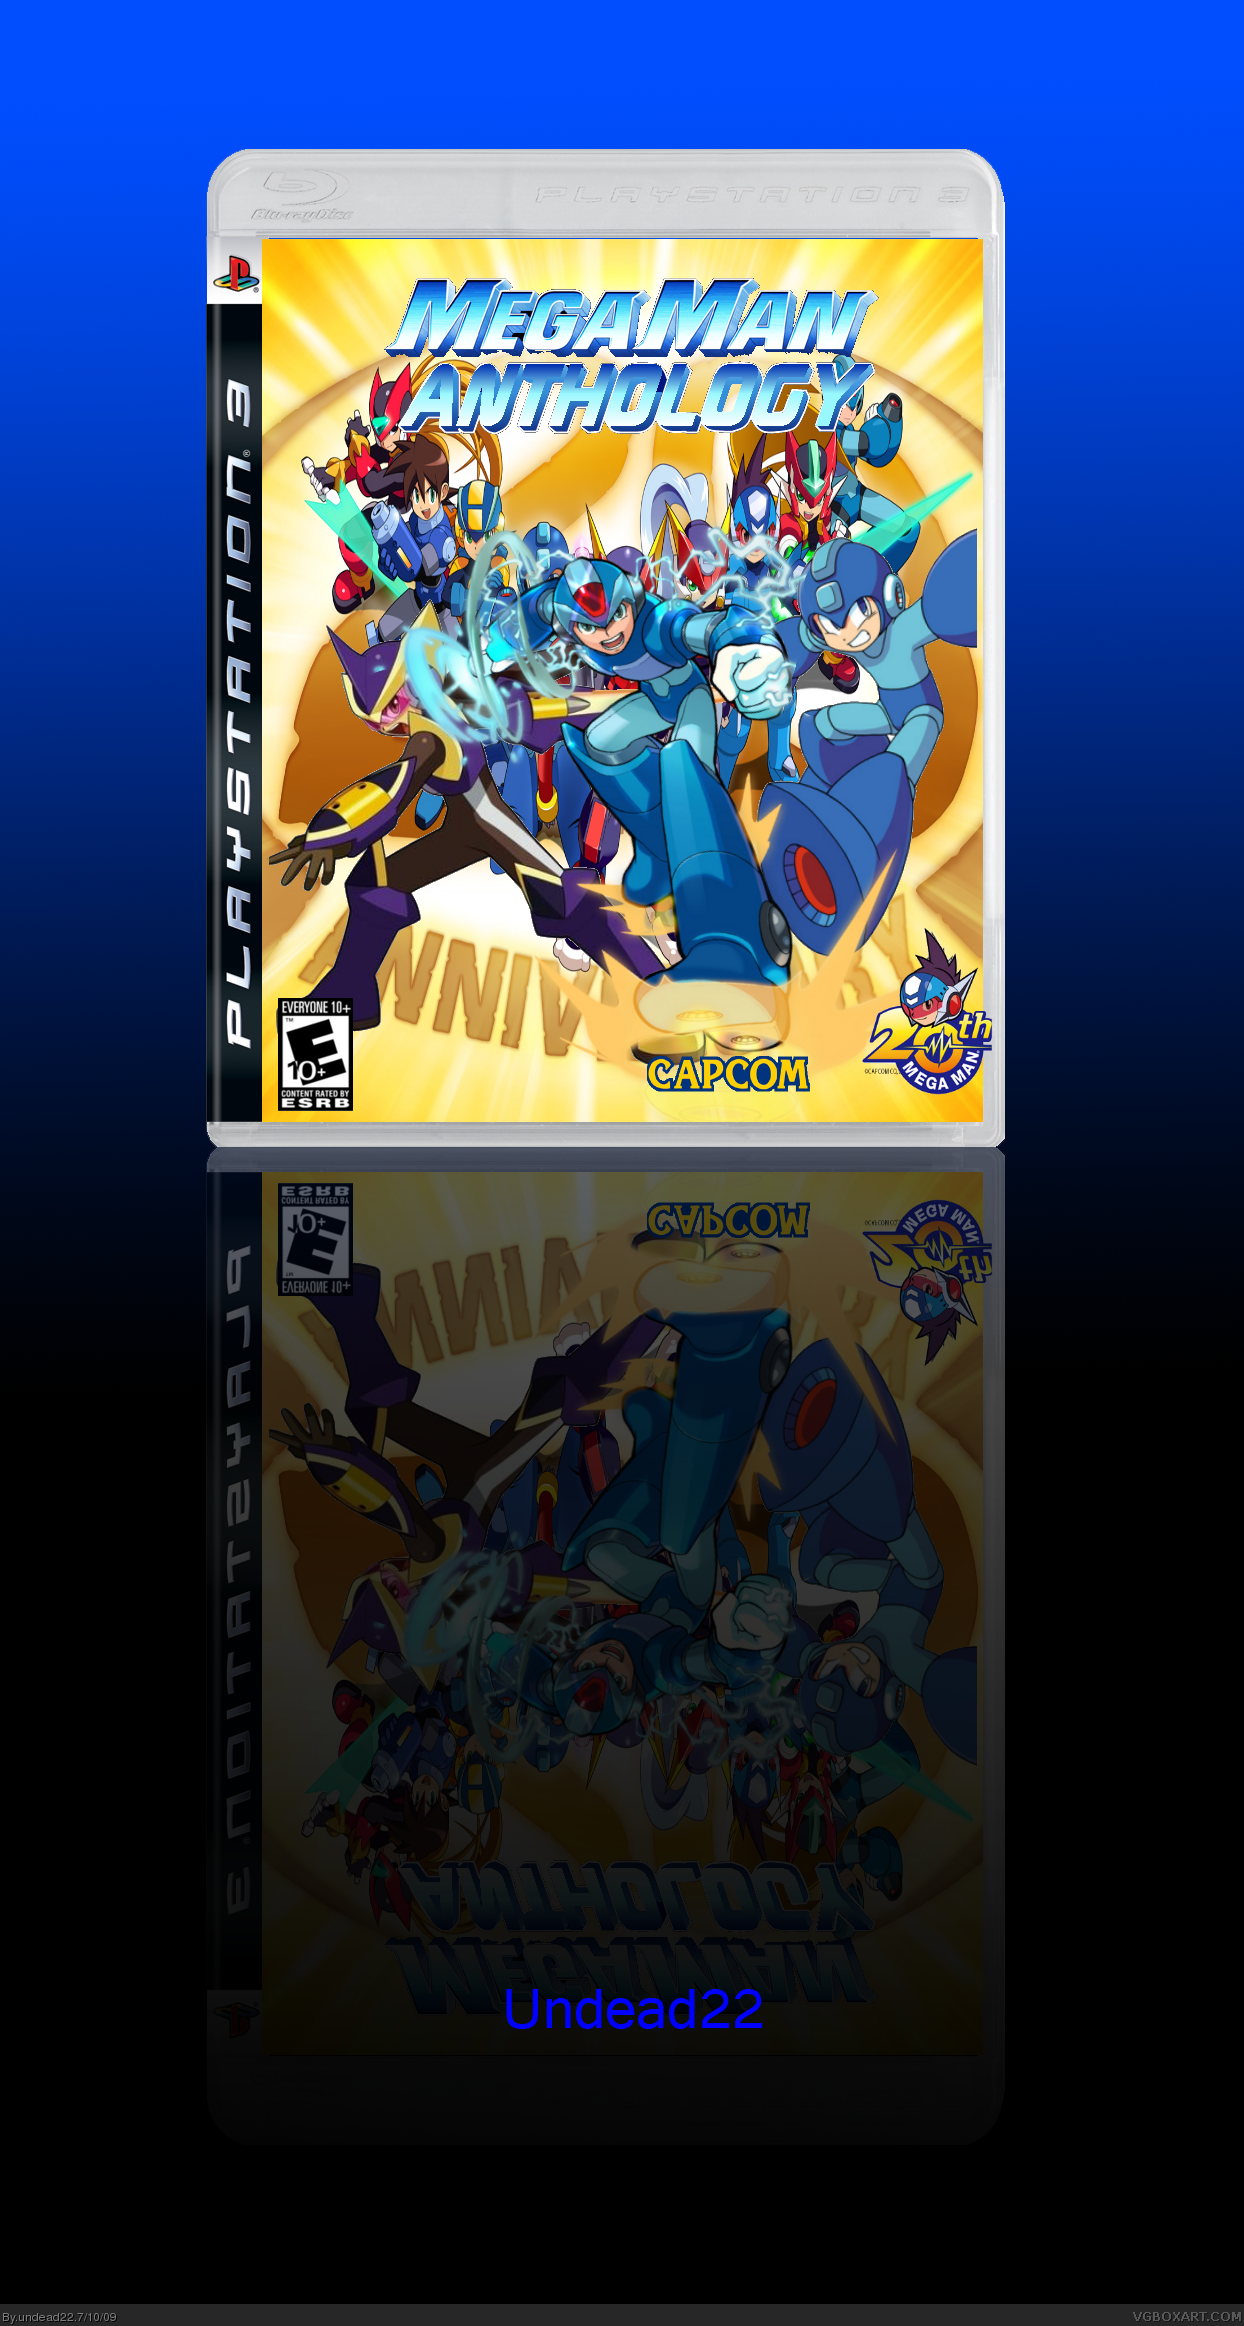 Mega Man Anthology box cover